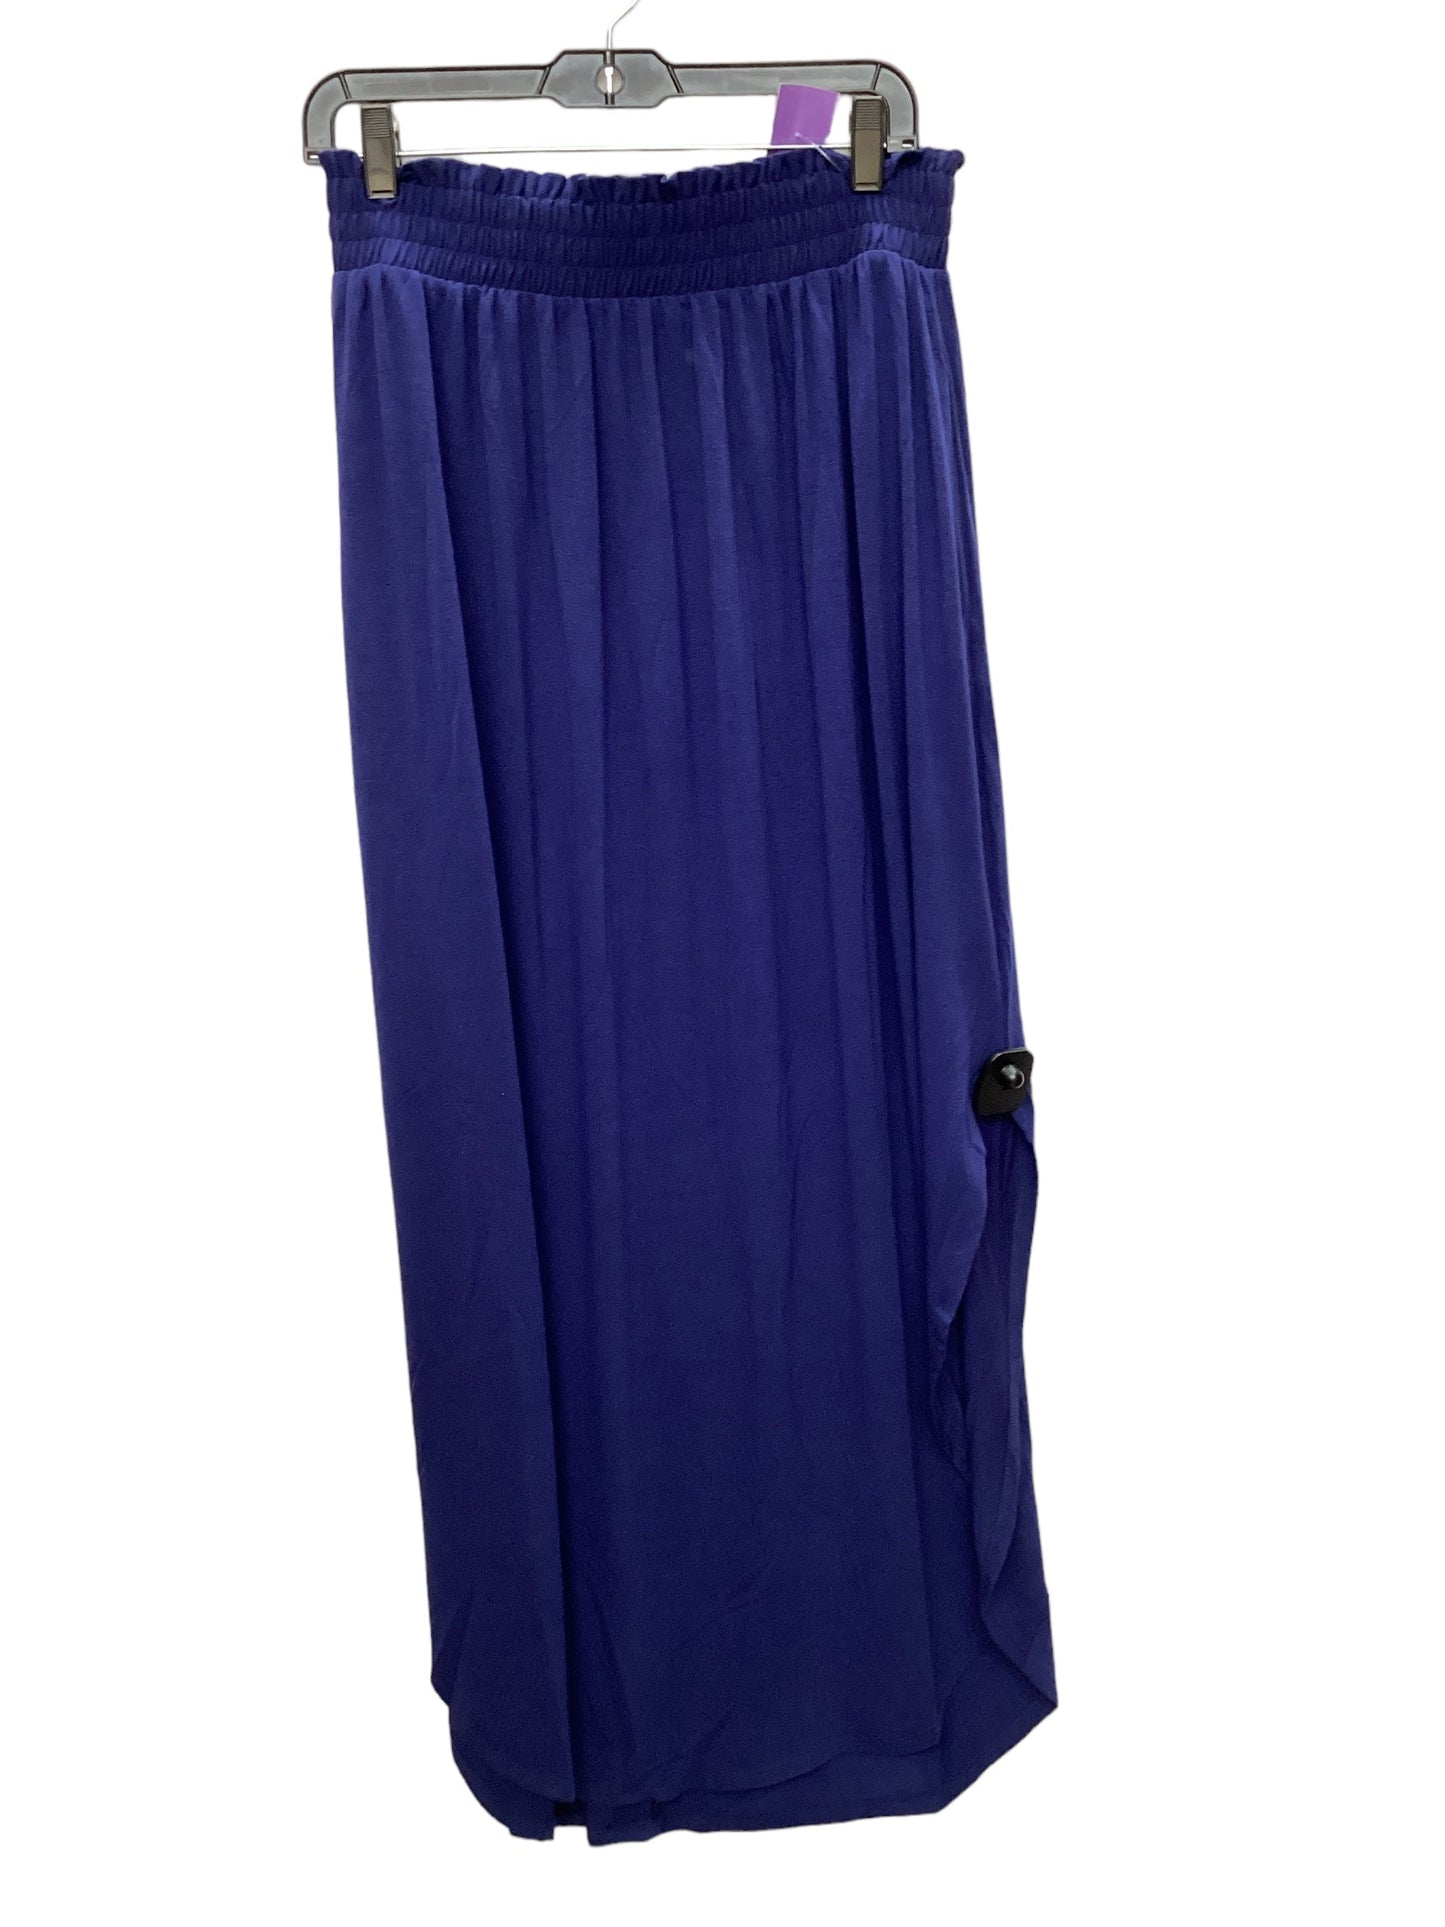 Navy Skirt Maxi Zenana Outfitters, Size 1x